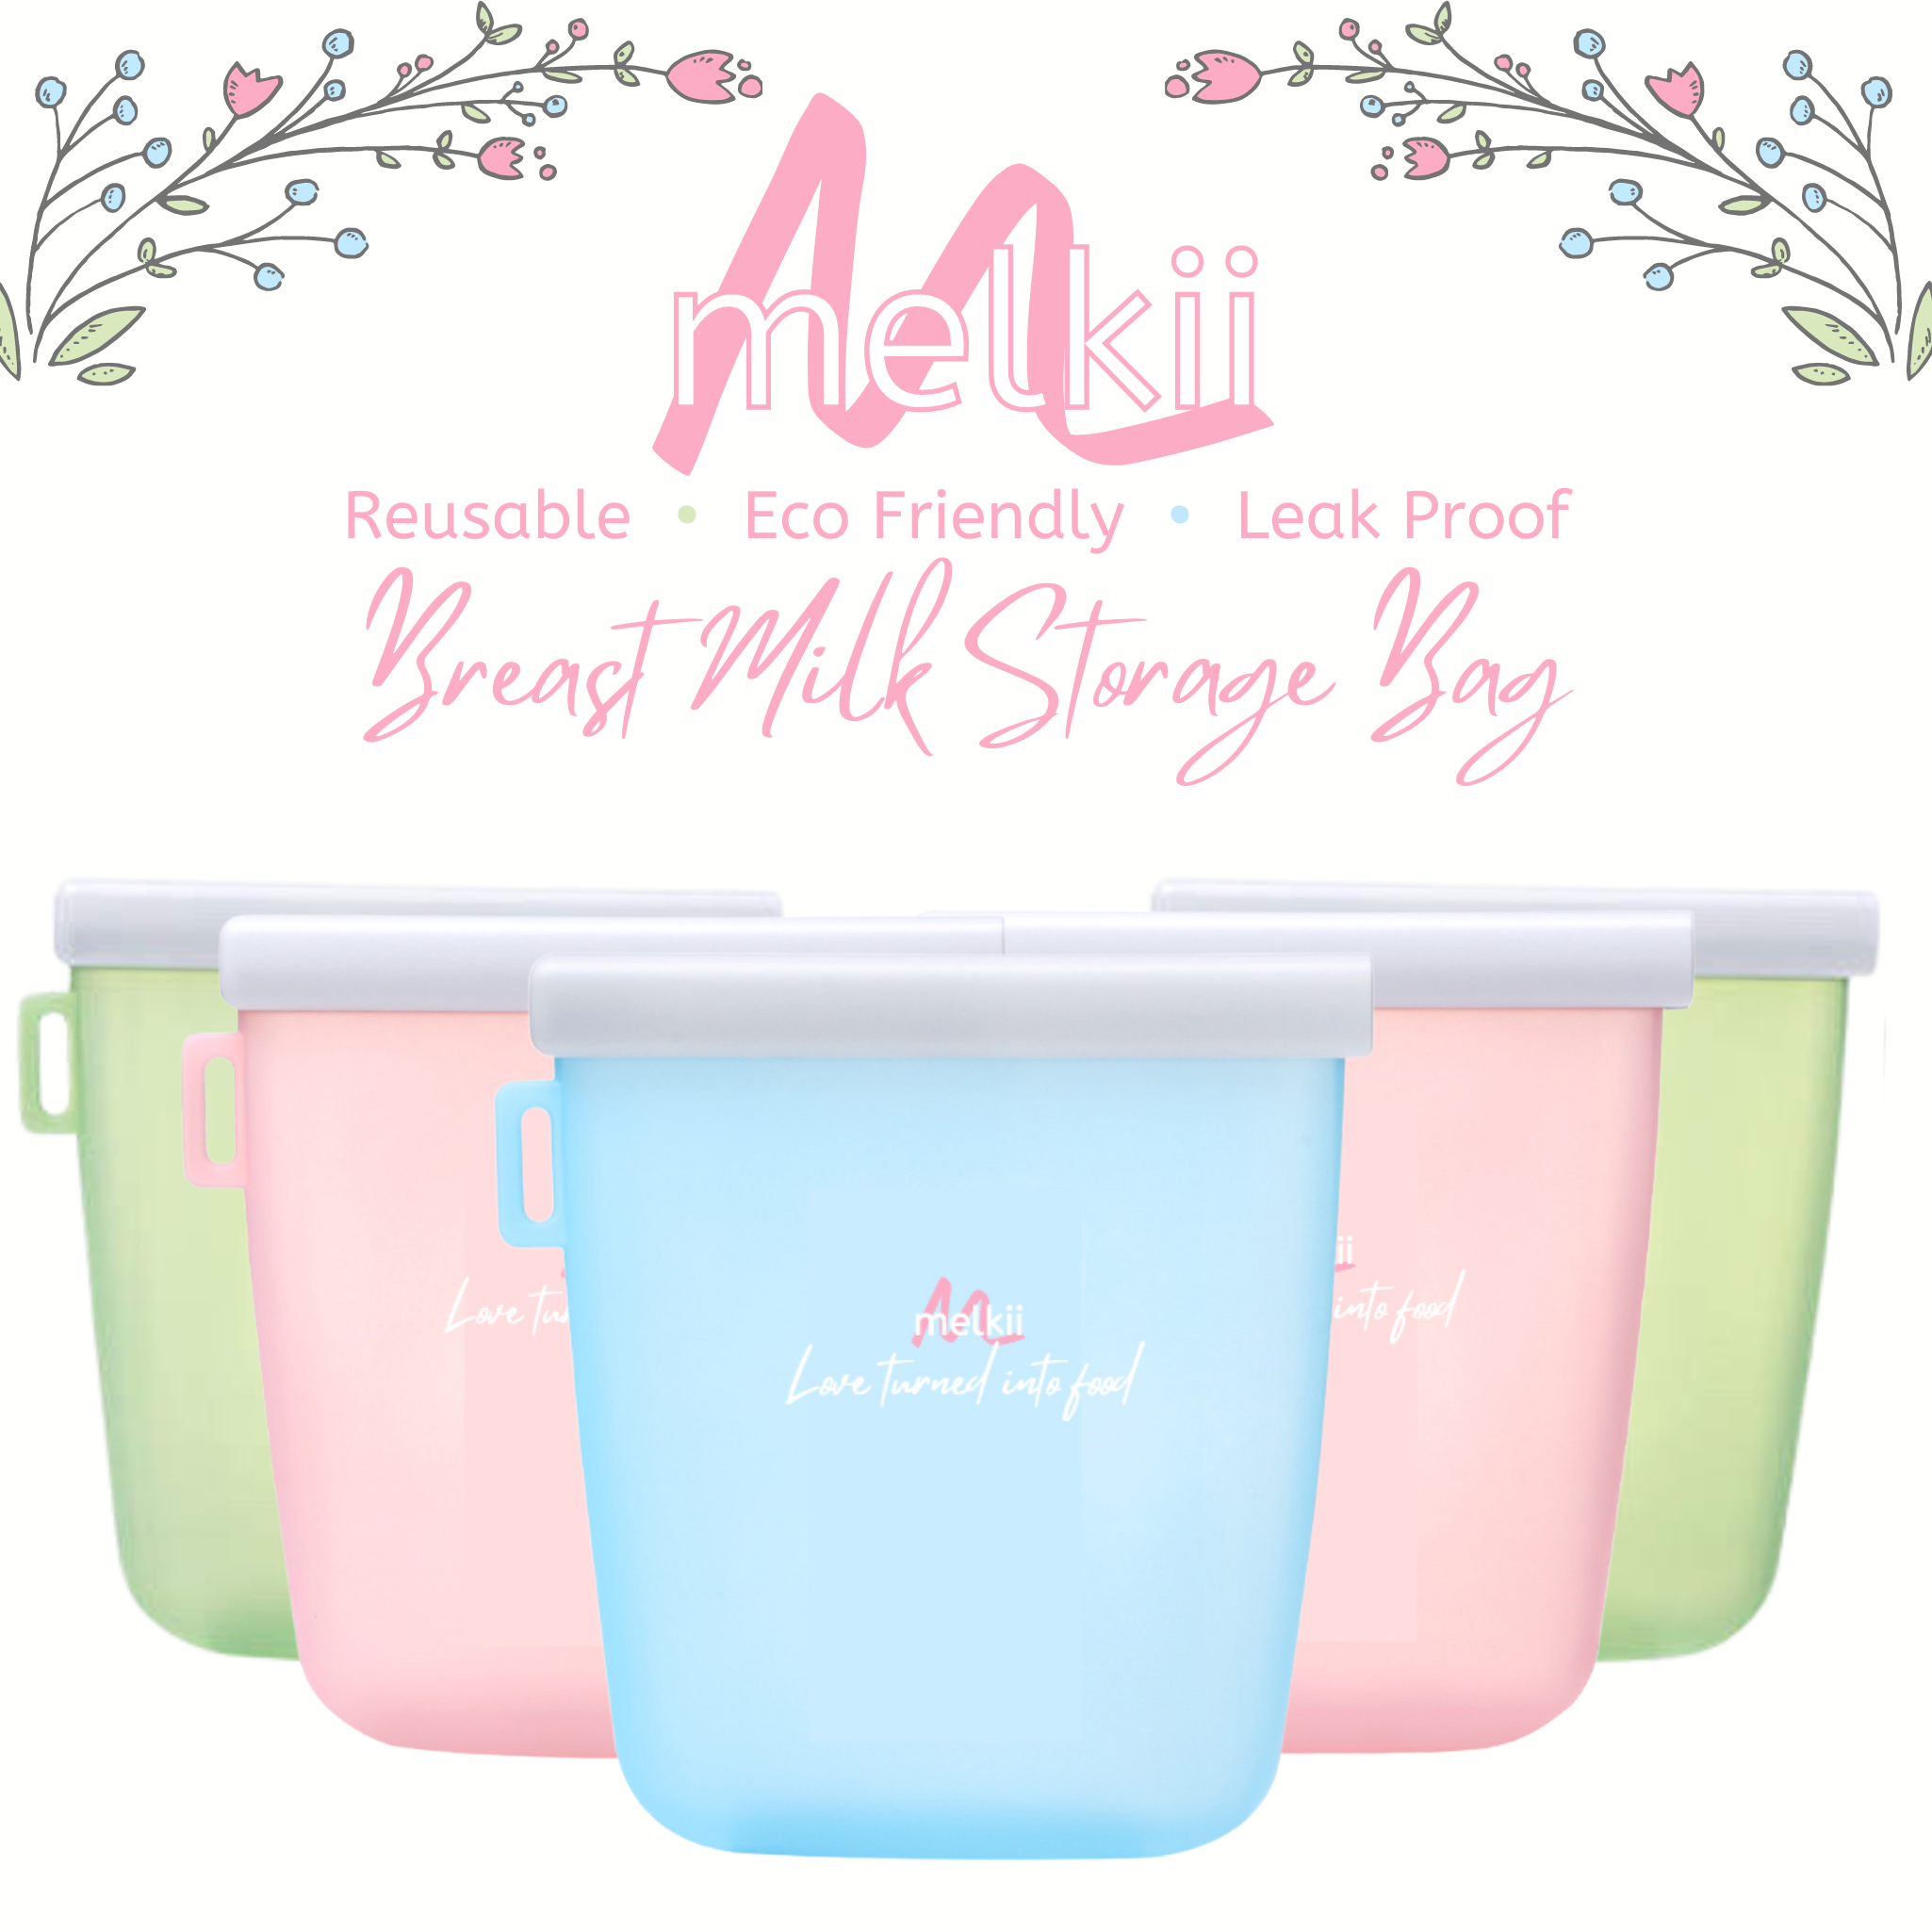 Melkii Reusable Milk Storage Bags